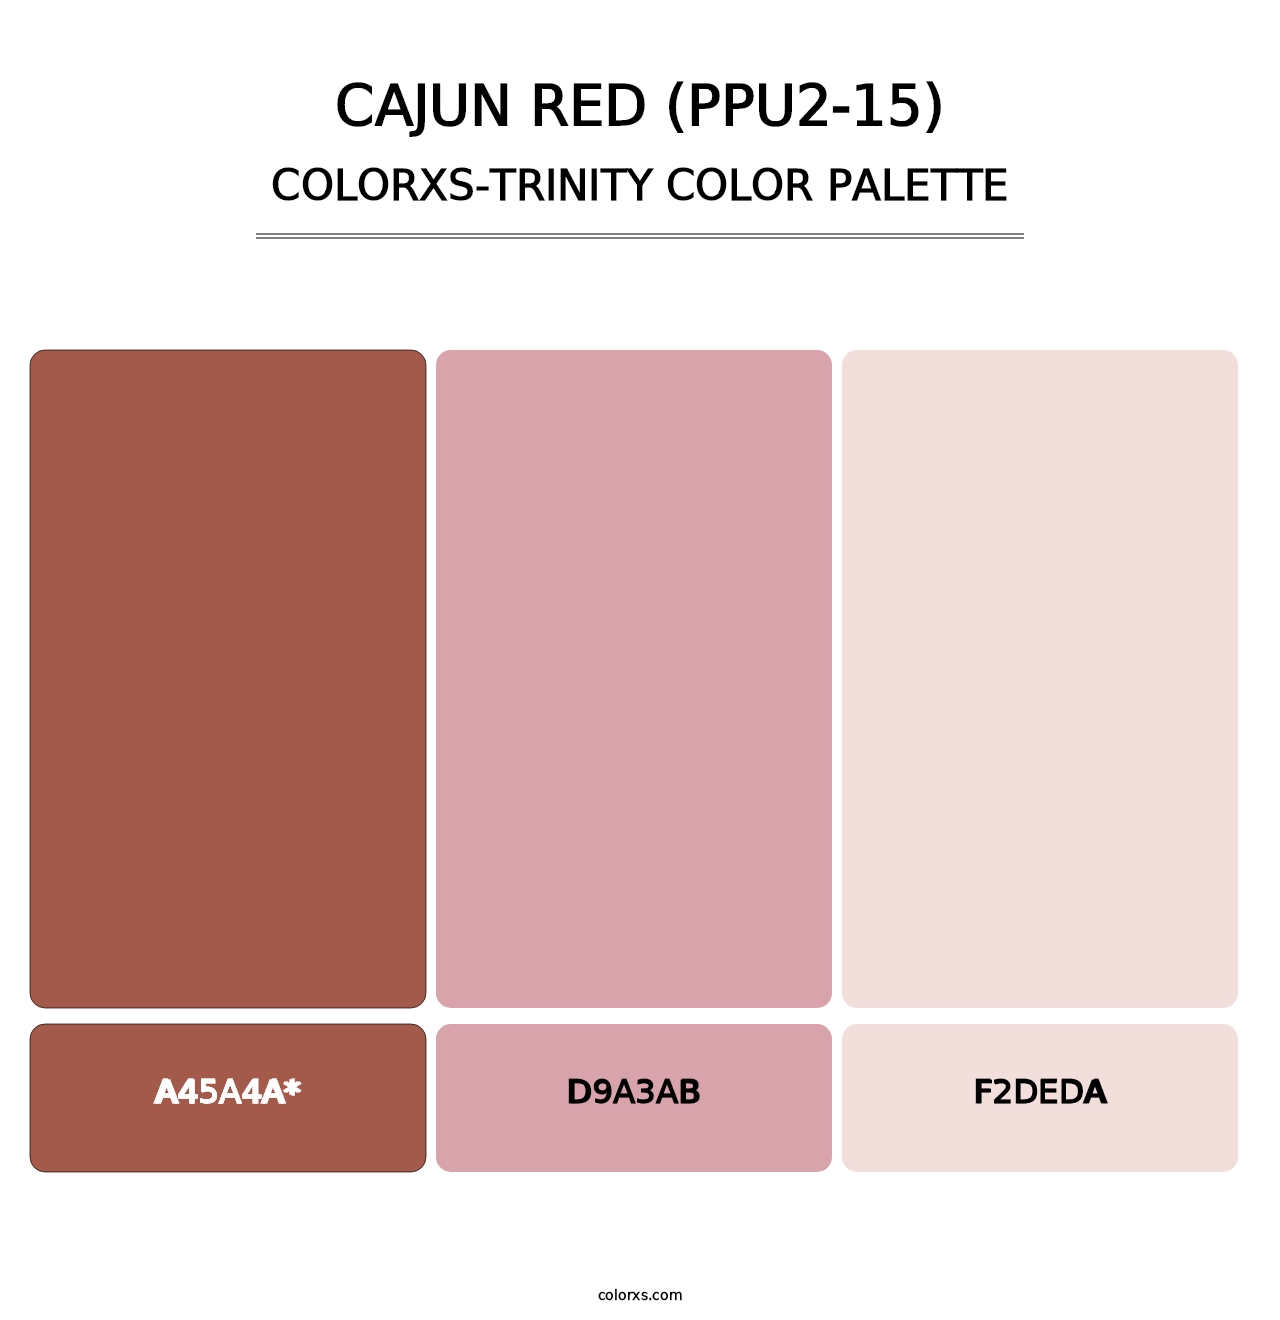 Cajun Red (PPU2-15) - Colorxs Trinity Palette